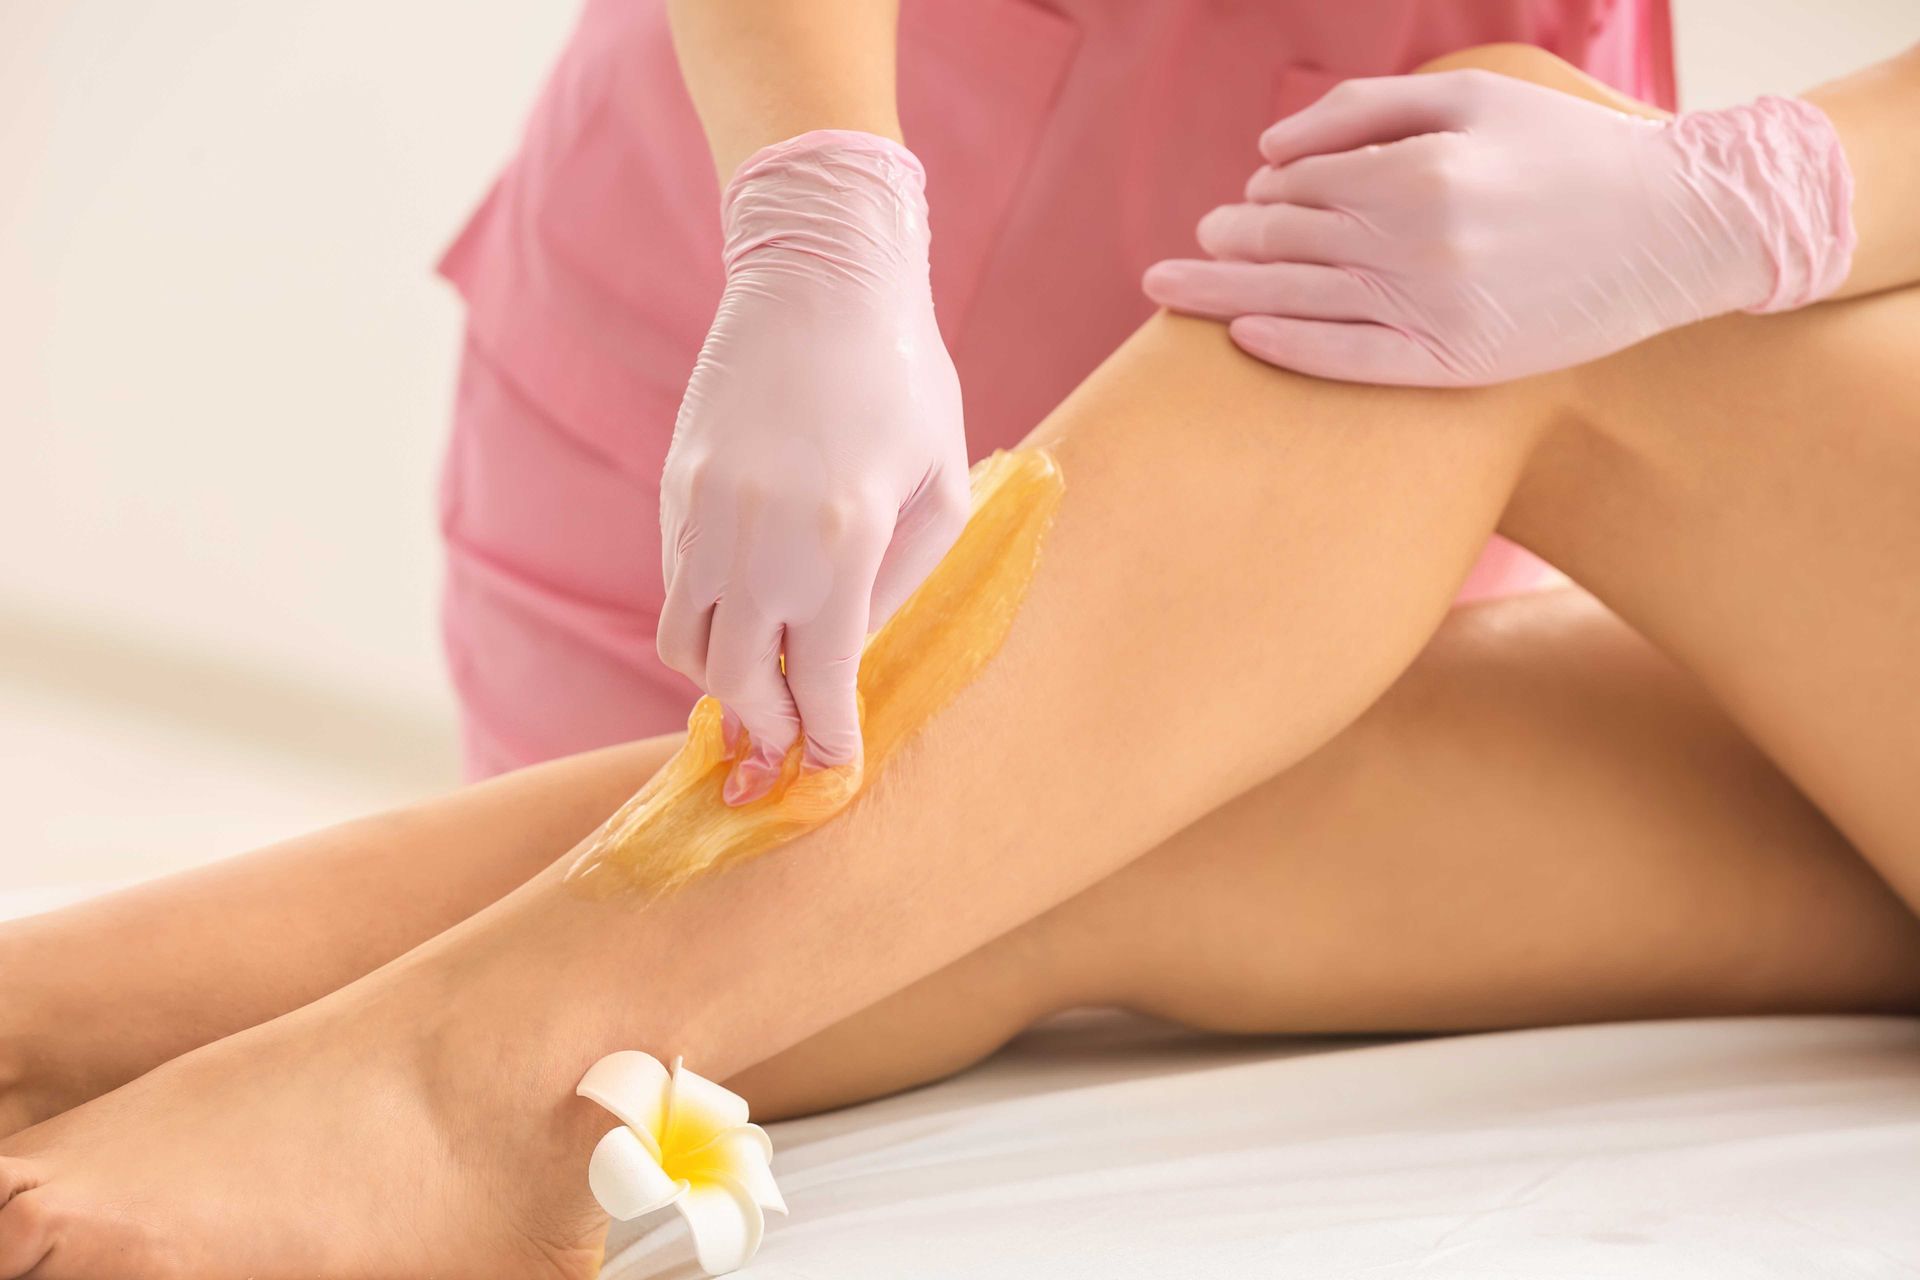 A woman is getting her legs waxed in a beauty salon